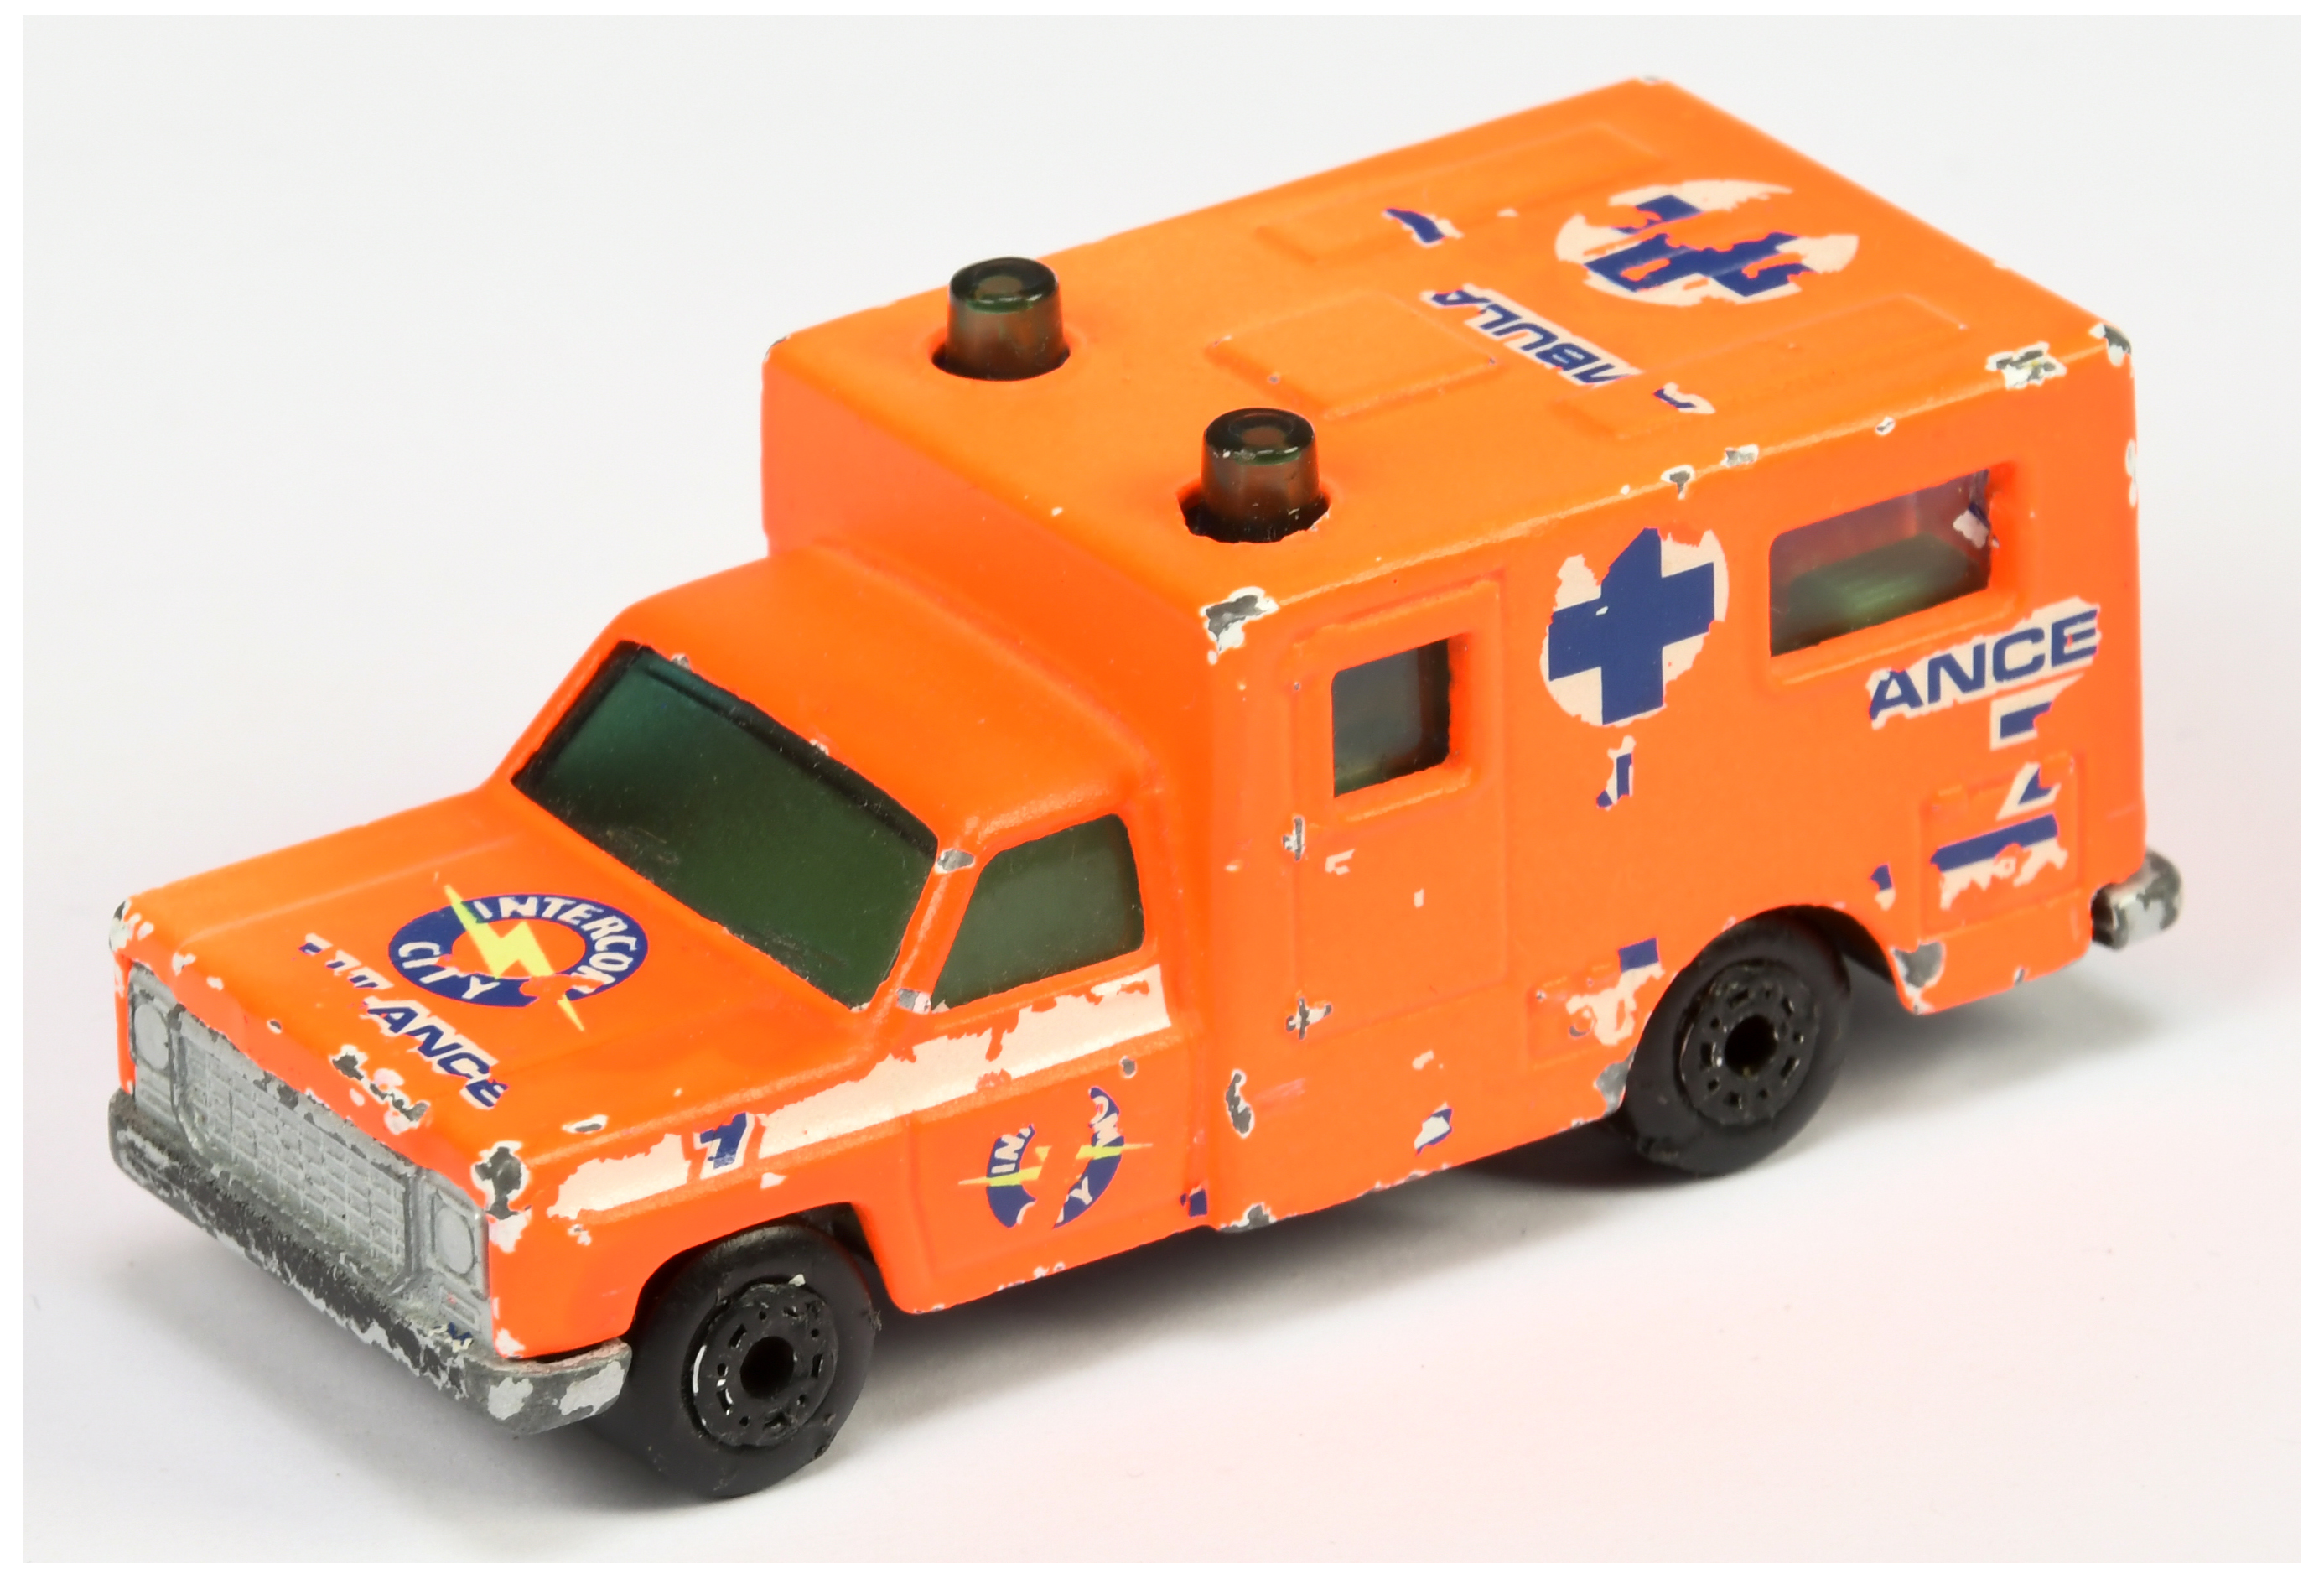 Matchbox Superfast 41e Chevrolet Ambulance Pre-production Trial model - flourescent orange red wi...